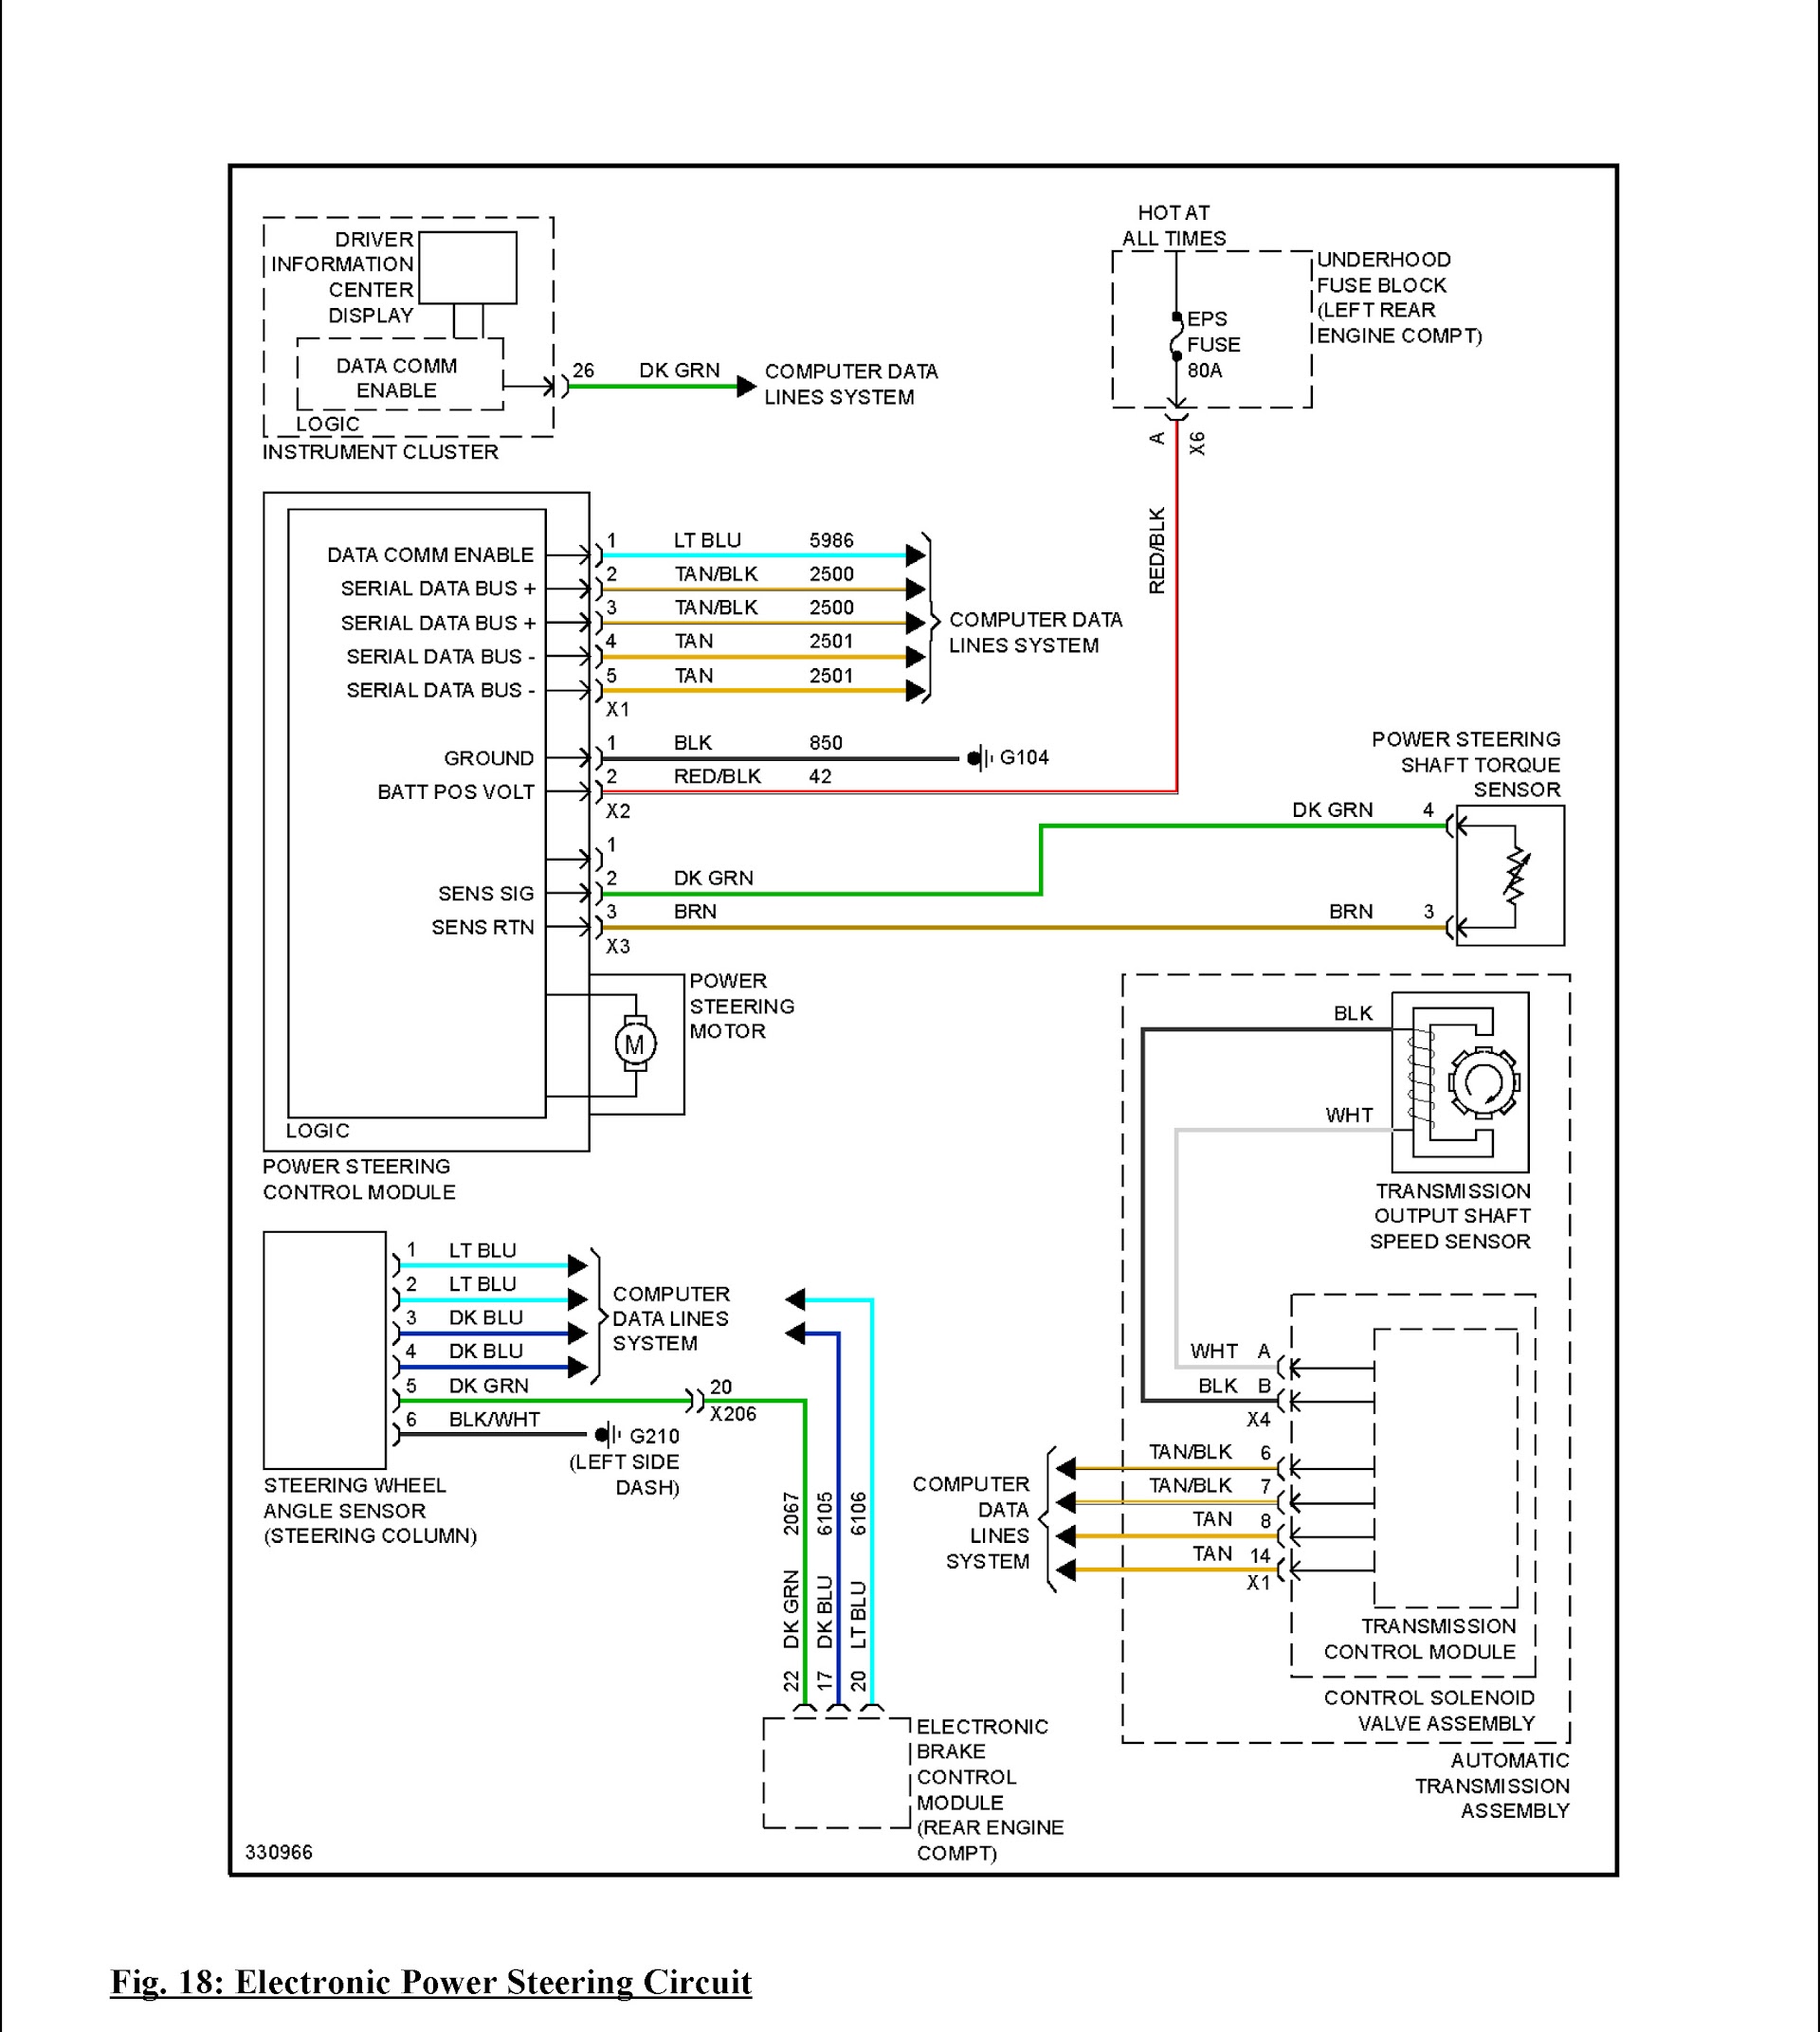 CONTENTS: 2010-2012 Chevrolet Equinox Repair Manual and GMC Terrain, wiring diagram